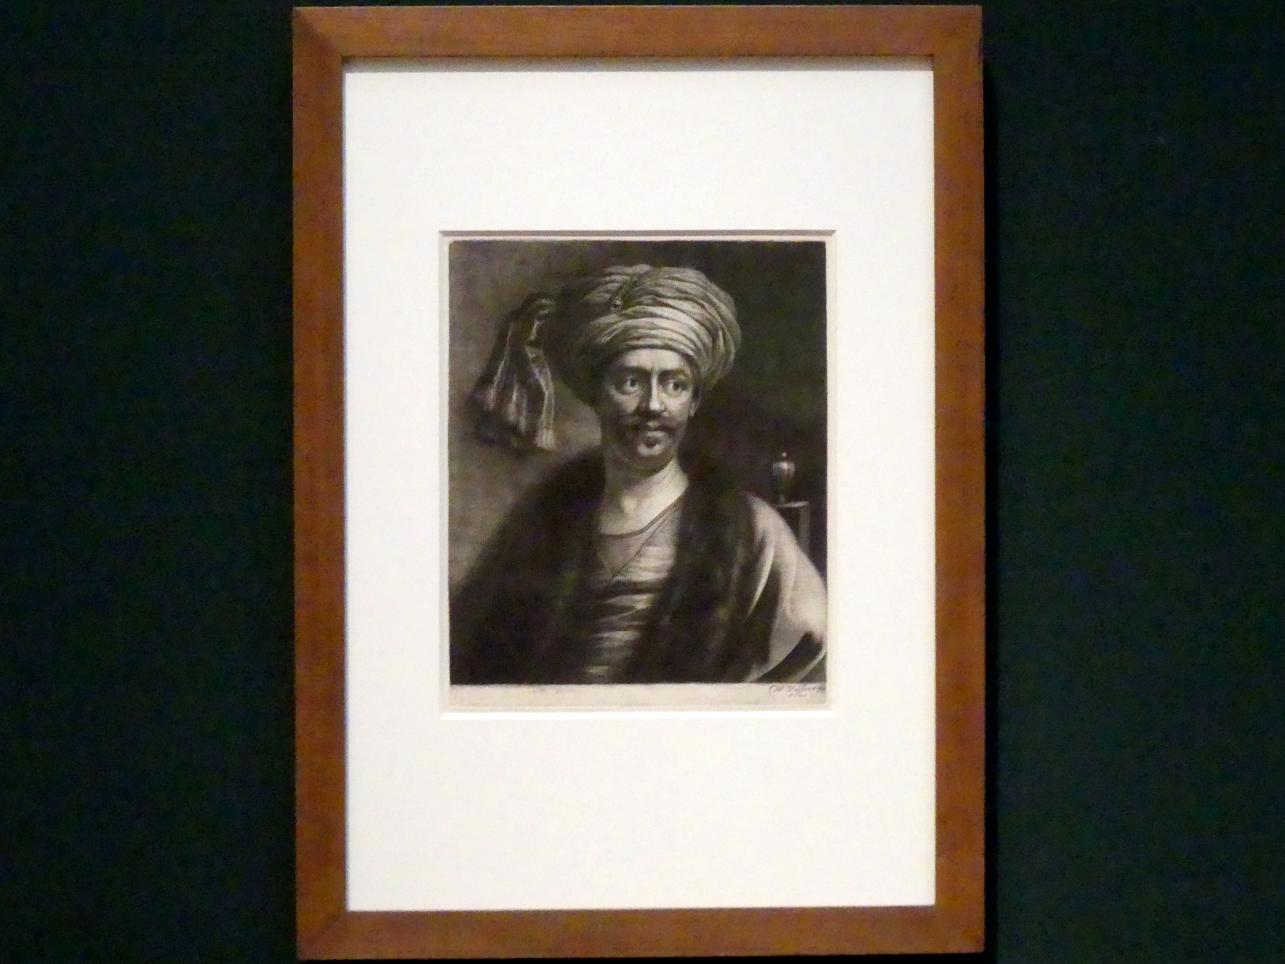 Wallerant Vaillant (1658–1667), Bildnis Sultan Süleymans II. (?), Potsdam, Museum Barberini, Ausstellung "Rembrandts Orient" vom 13.03.-27.06.2021, Saal A5, um 1658–1677